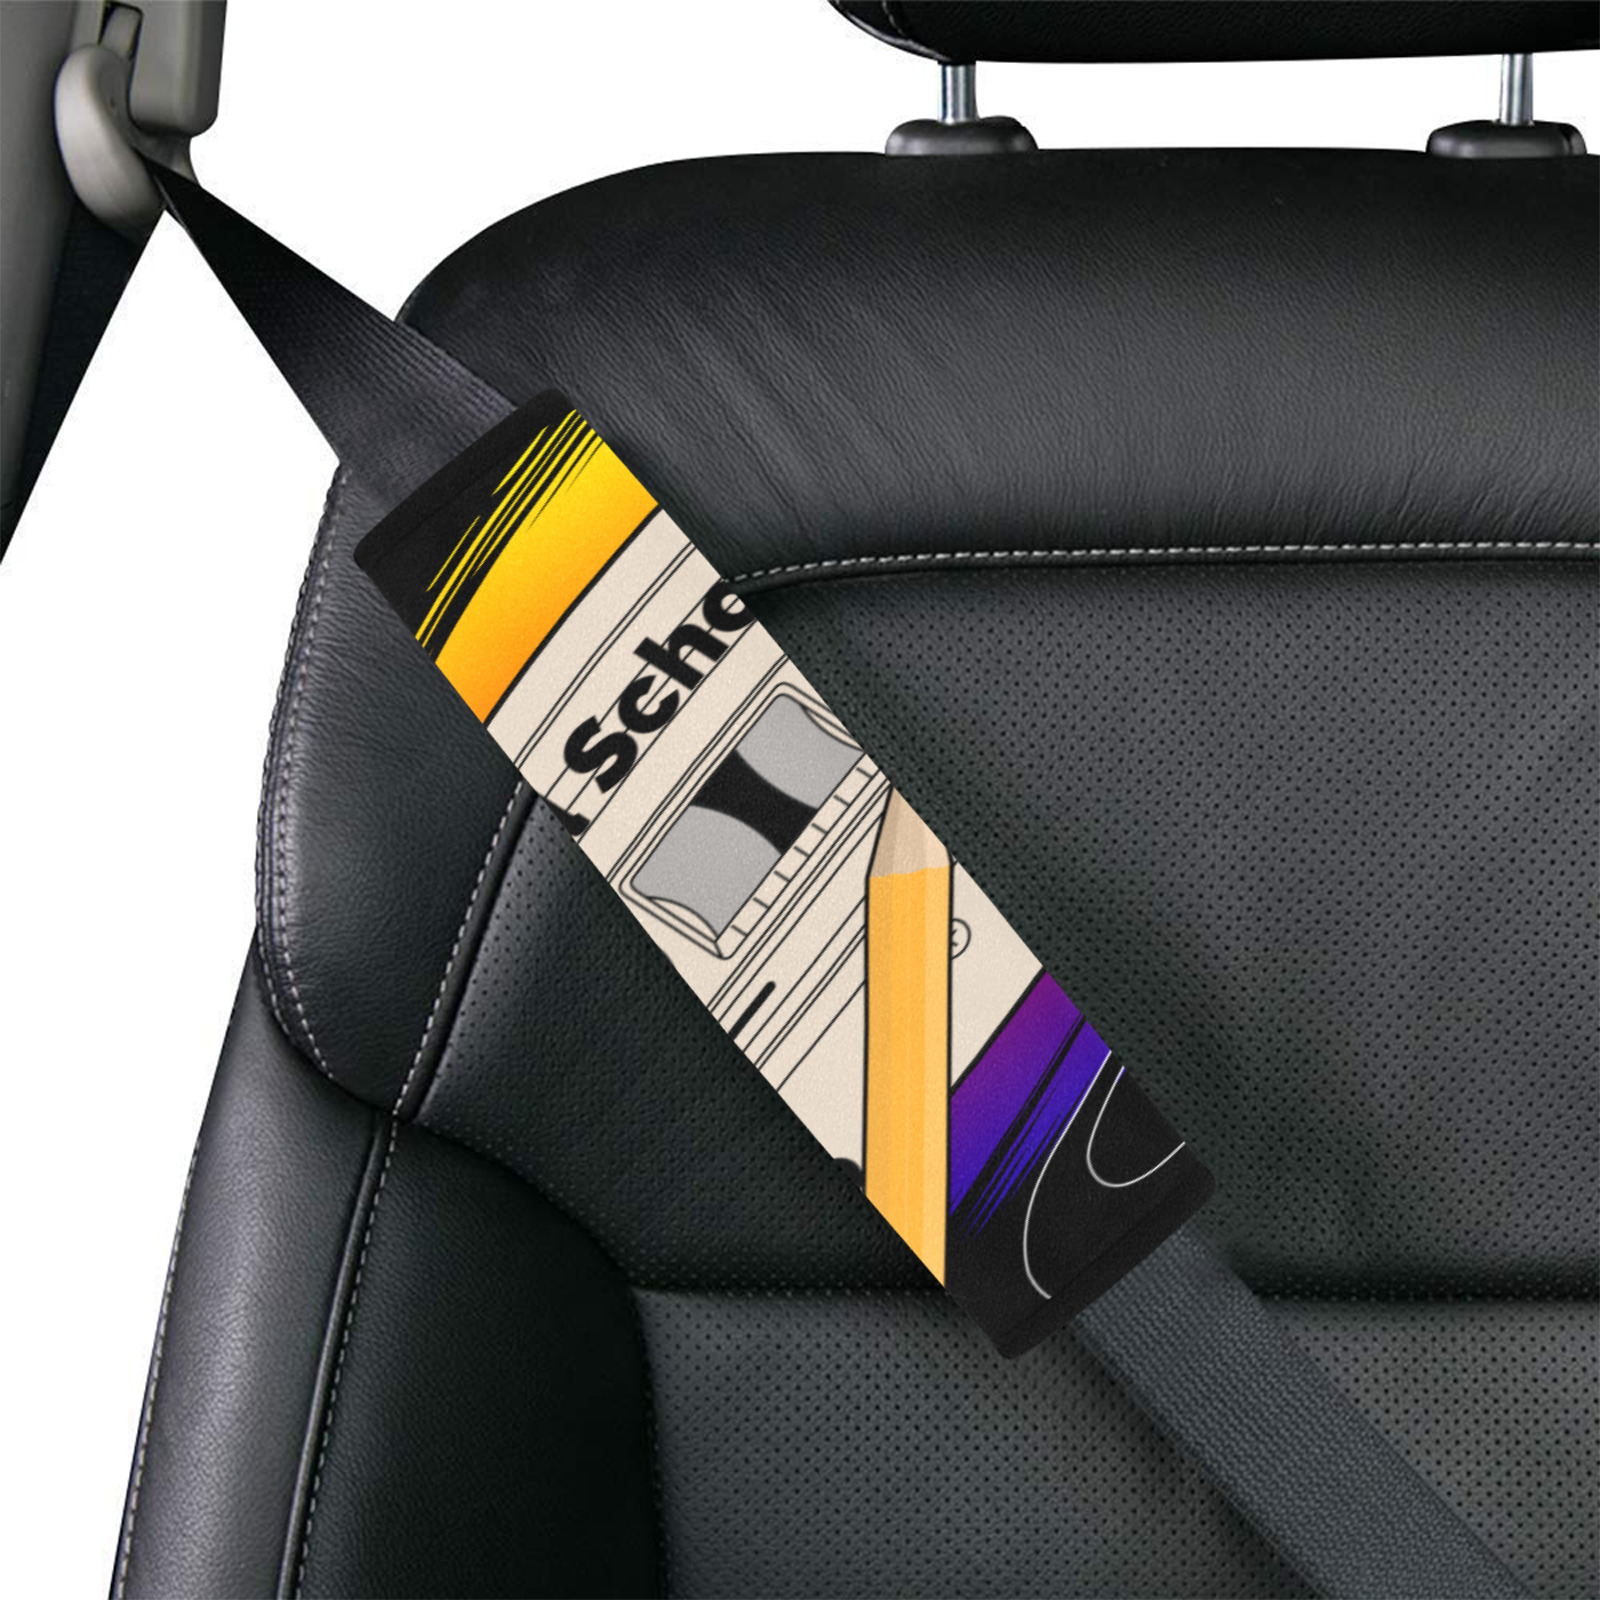 Old School Memories Car Seat Belt Cover 7''x10''